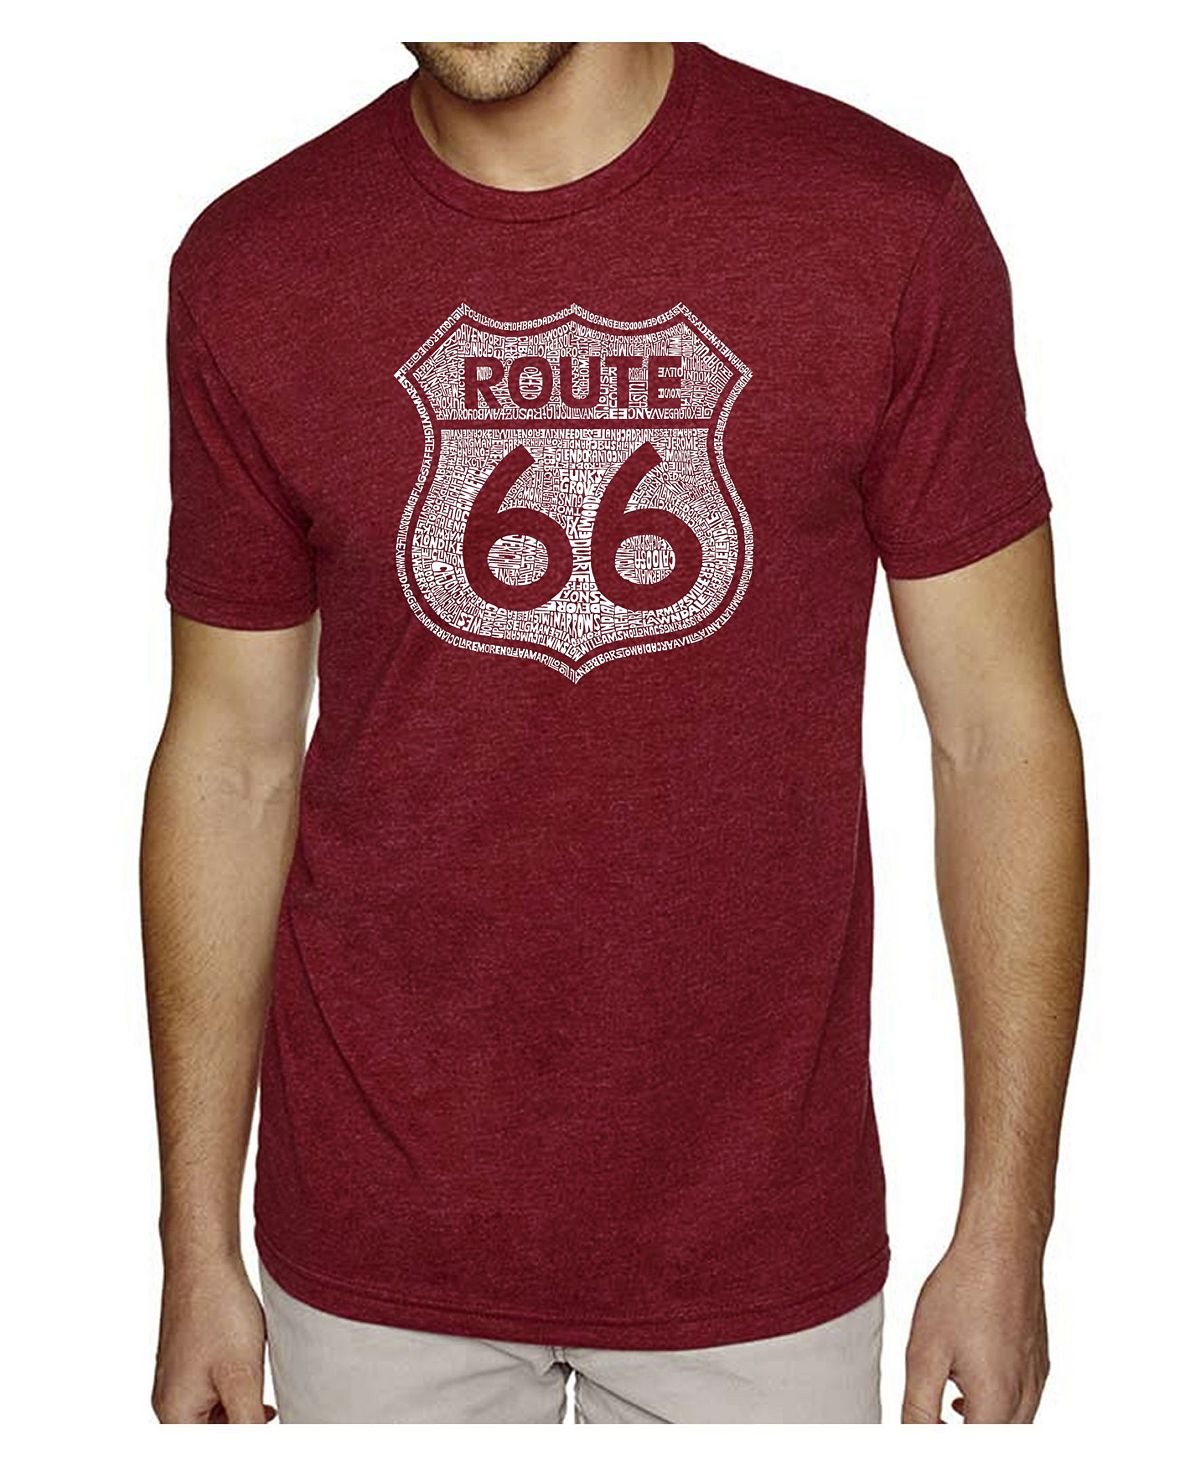 Мужская футболка premium blend word art - route 66 LA Pop Art мужская футболка с длинным рукавом word art route 66 la pop art черный